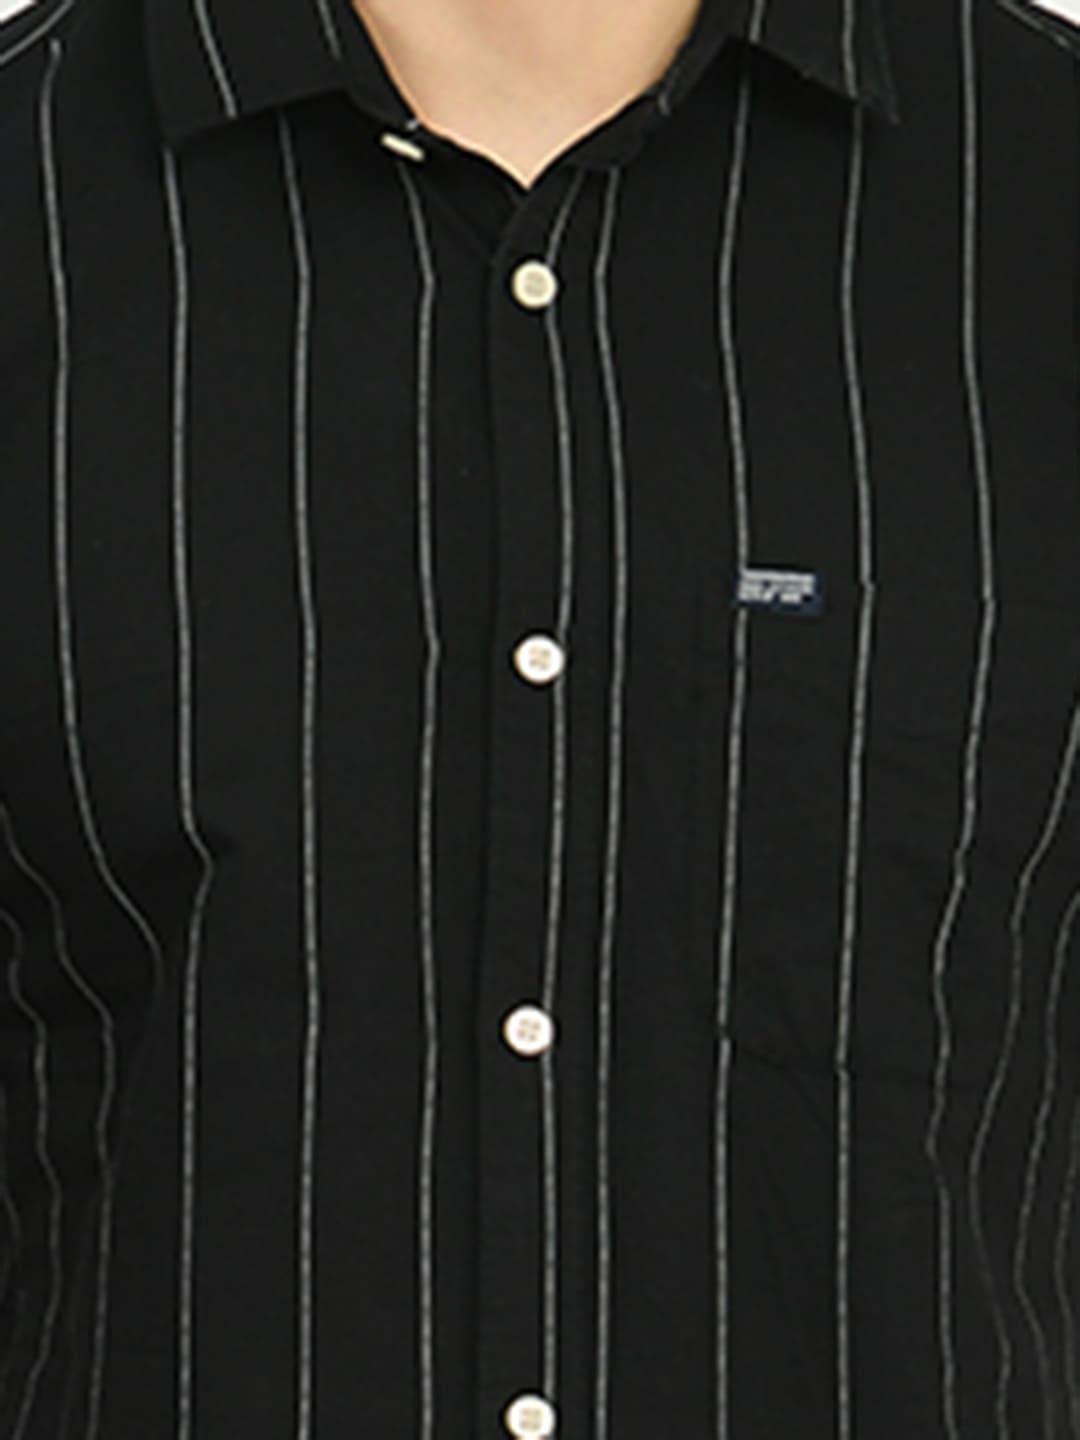 Men's Black Stripes Cotton Spread Collar Shirt